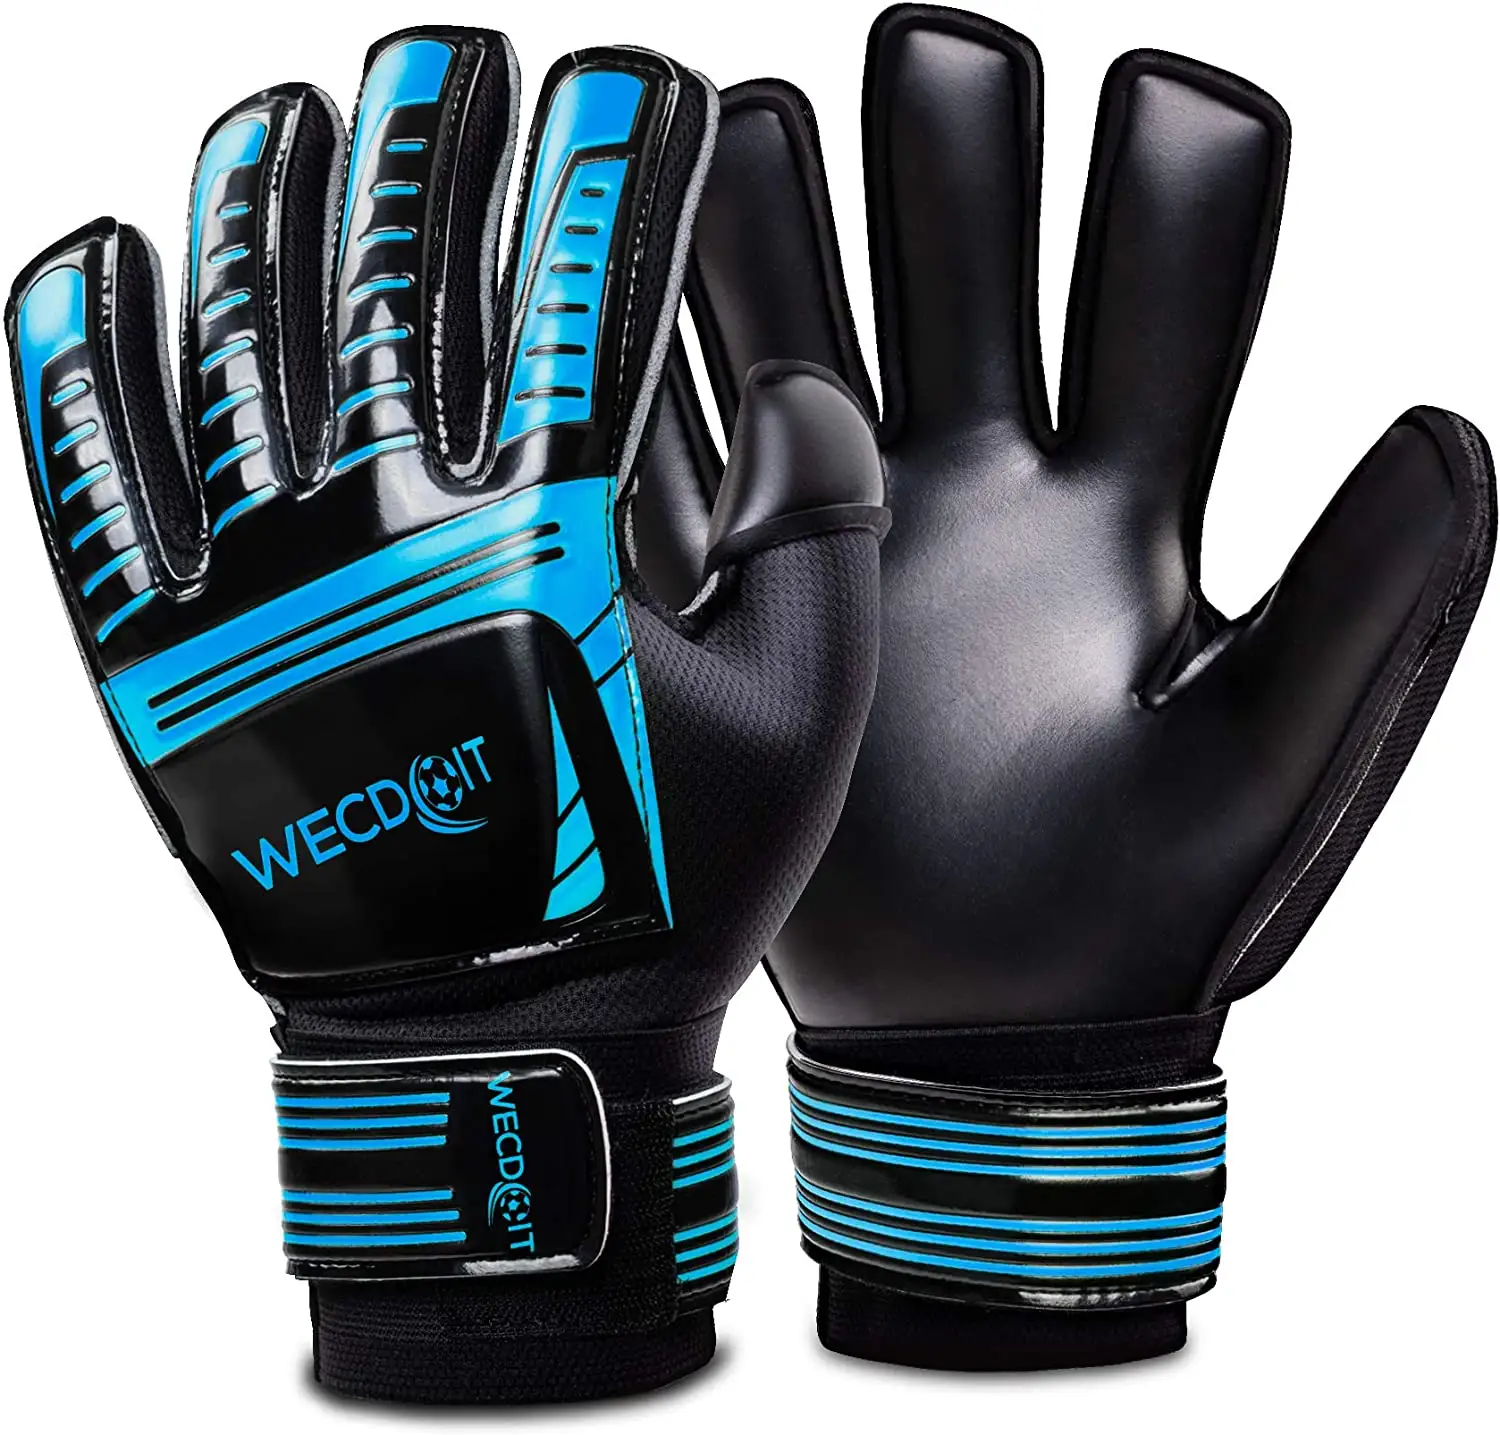 Goalkeeper Gloves Manufacturer Reusch Goalkeeping Goalkeeper Gloves Genuine